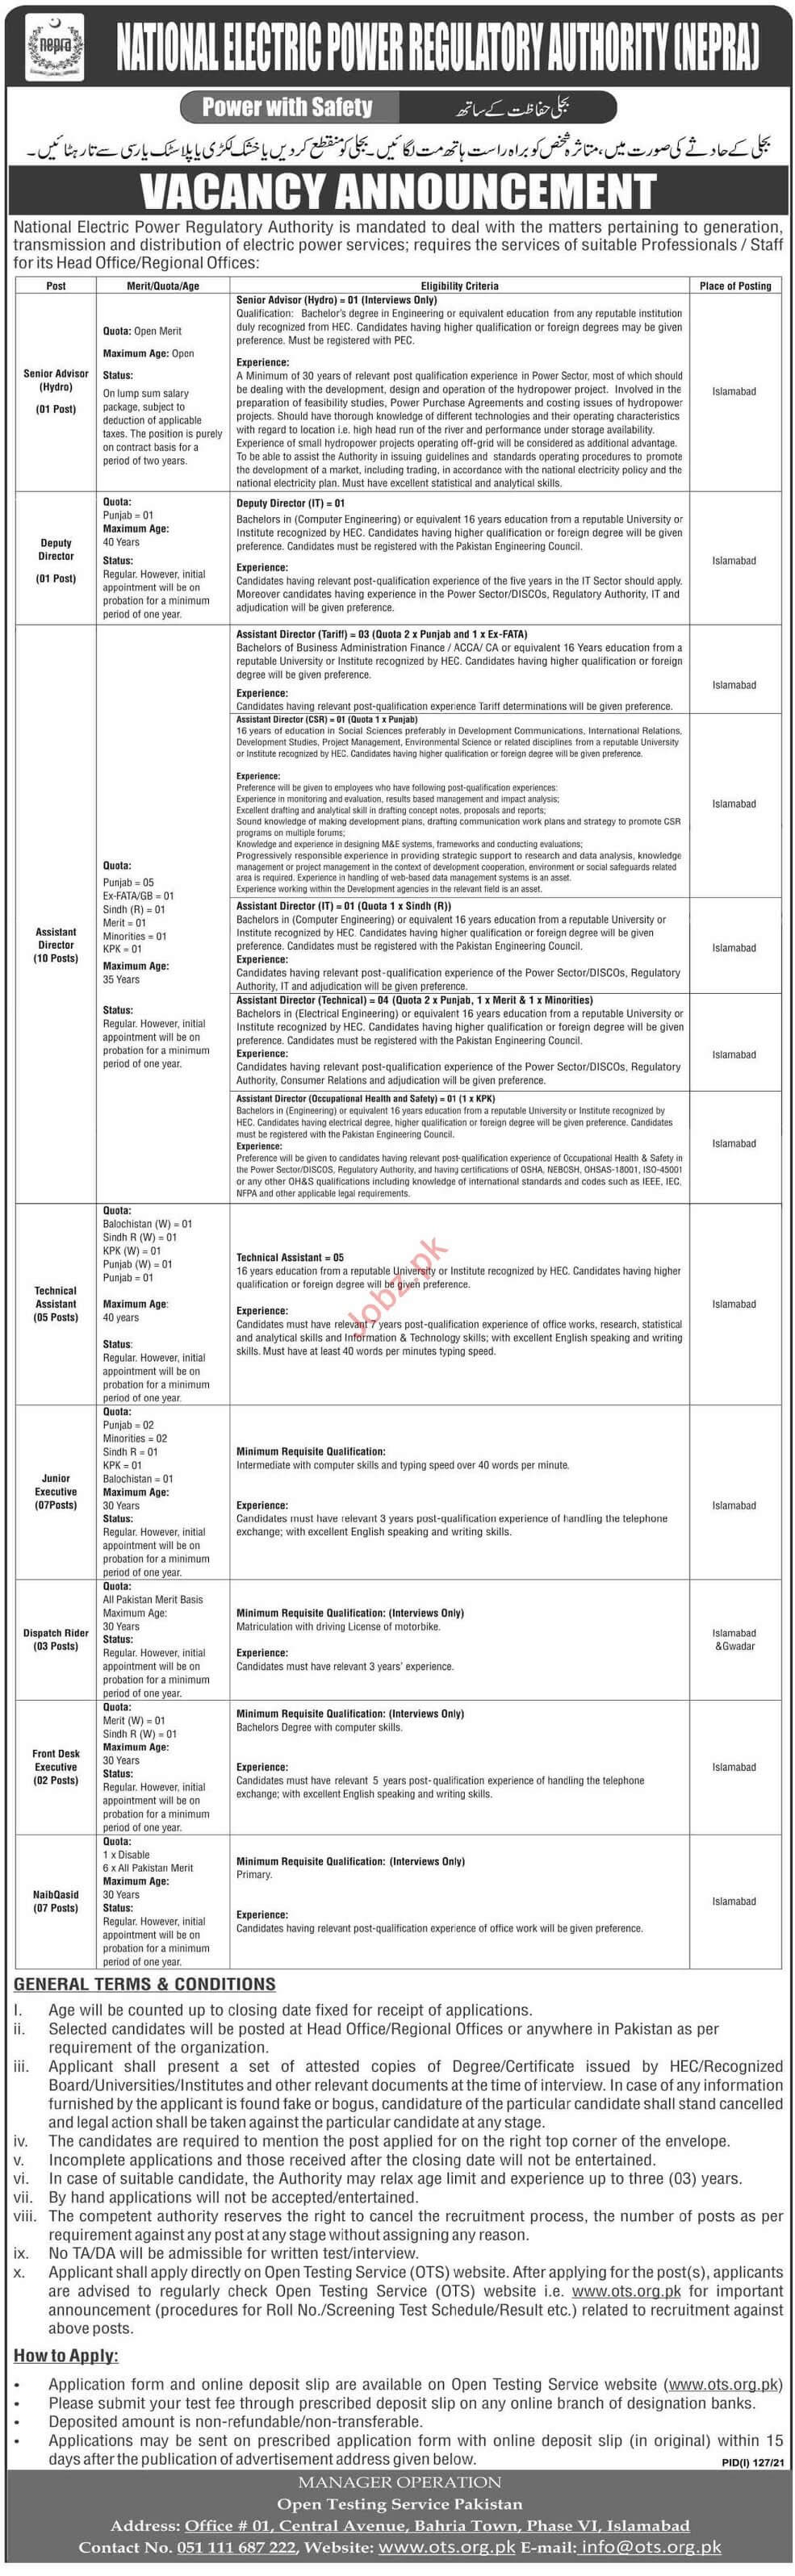 National Electric Power Regulatory Authority NEPRA Jobs 2021 in Pakistan - www.nepra.org.pk Jobs 2021